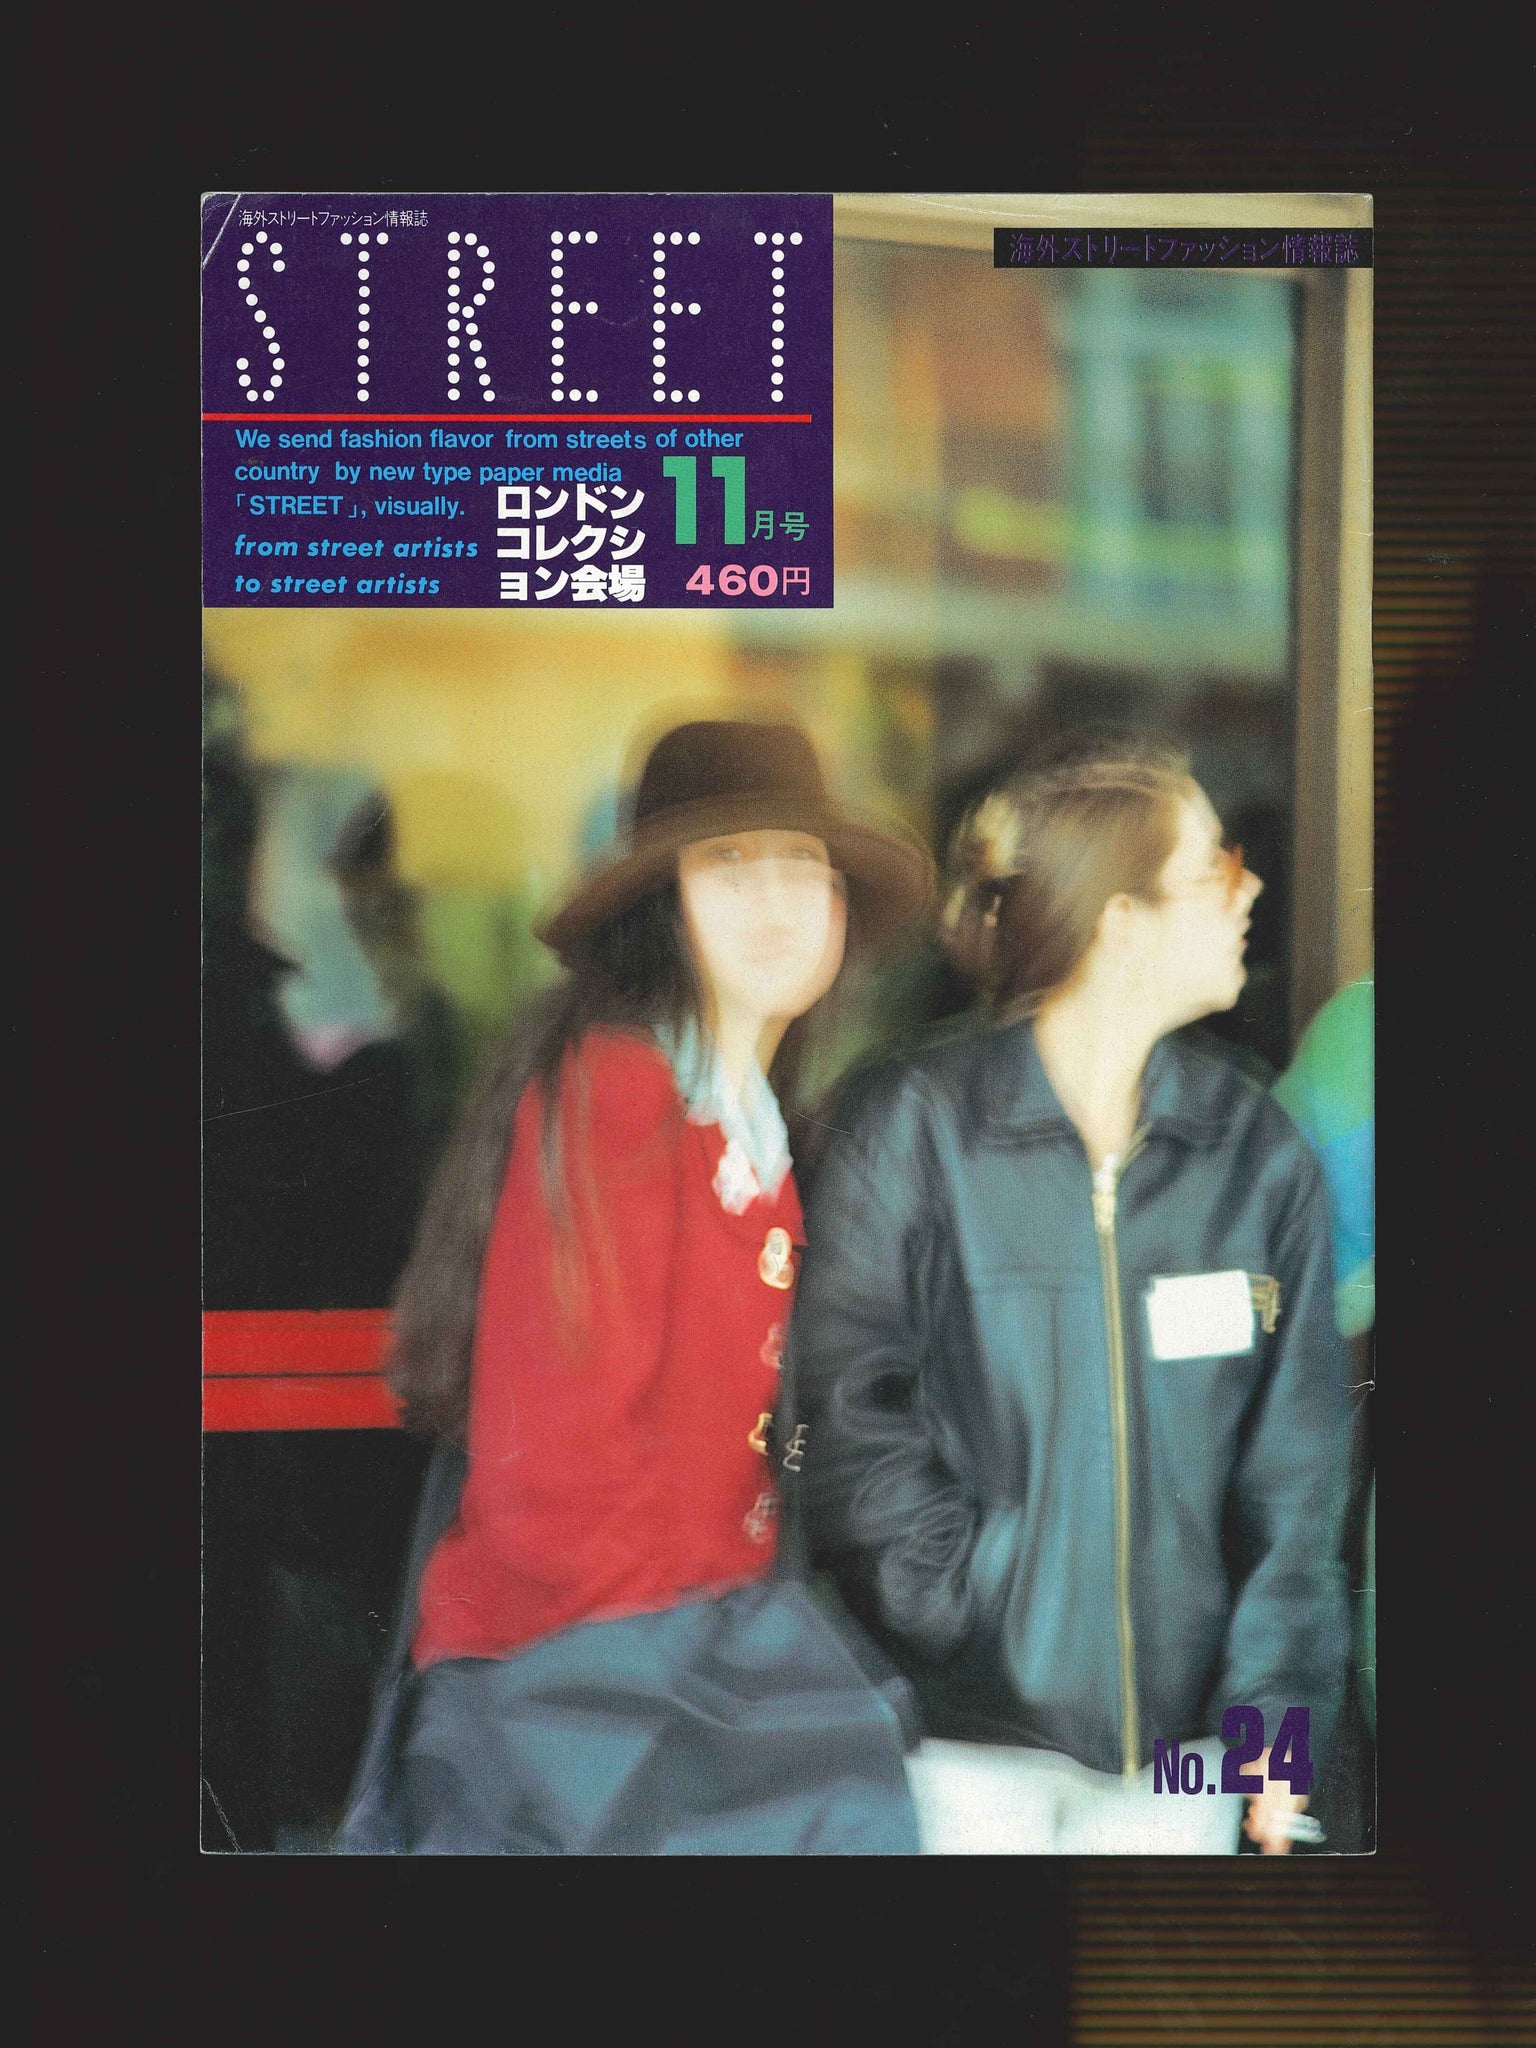 STREET magazine no. 24 / november 1989 / london collections / Shoichi Aoki